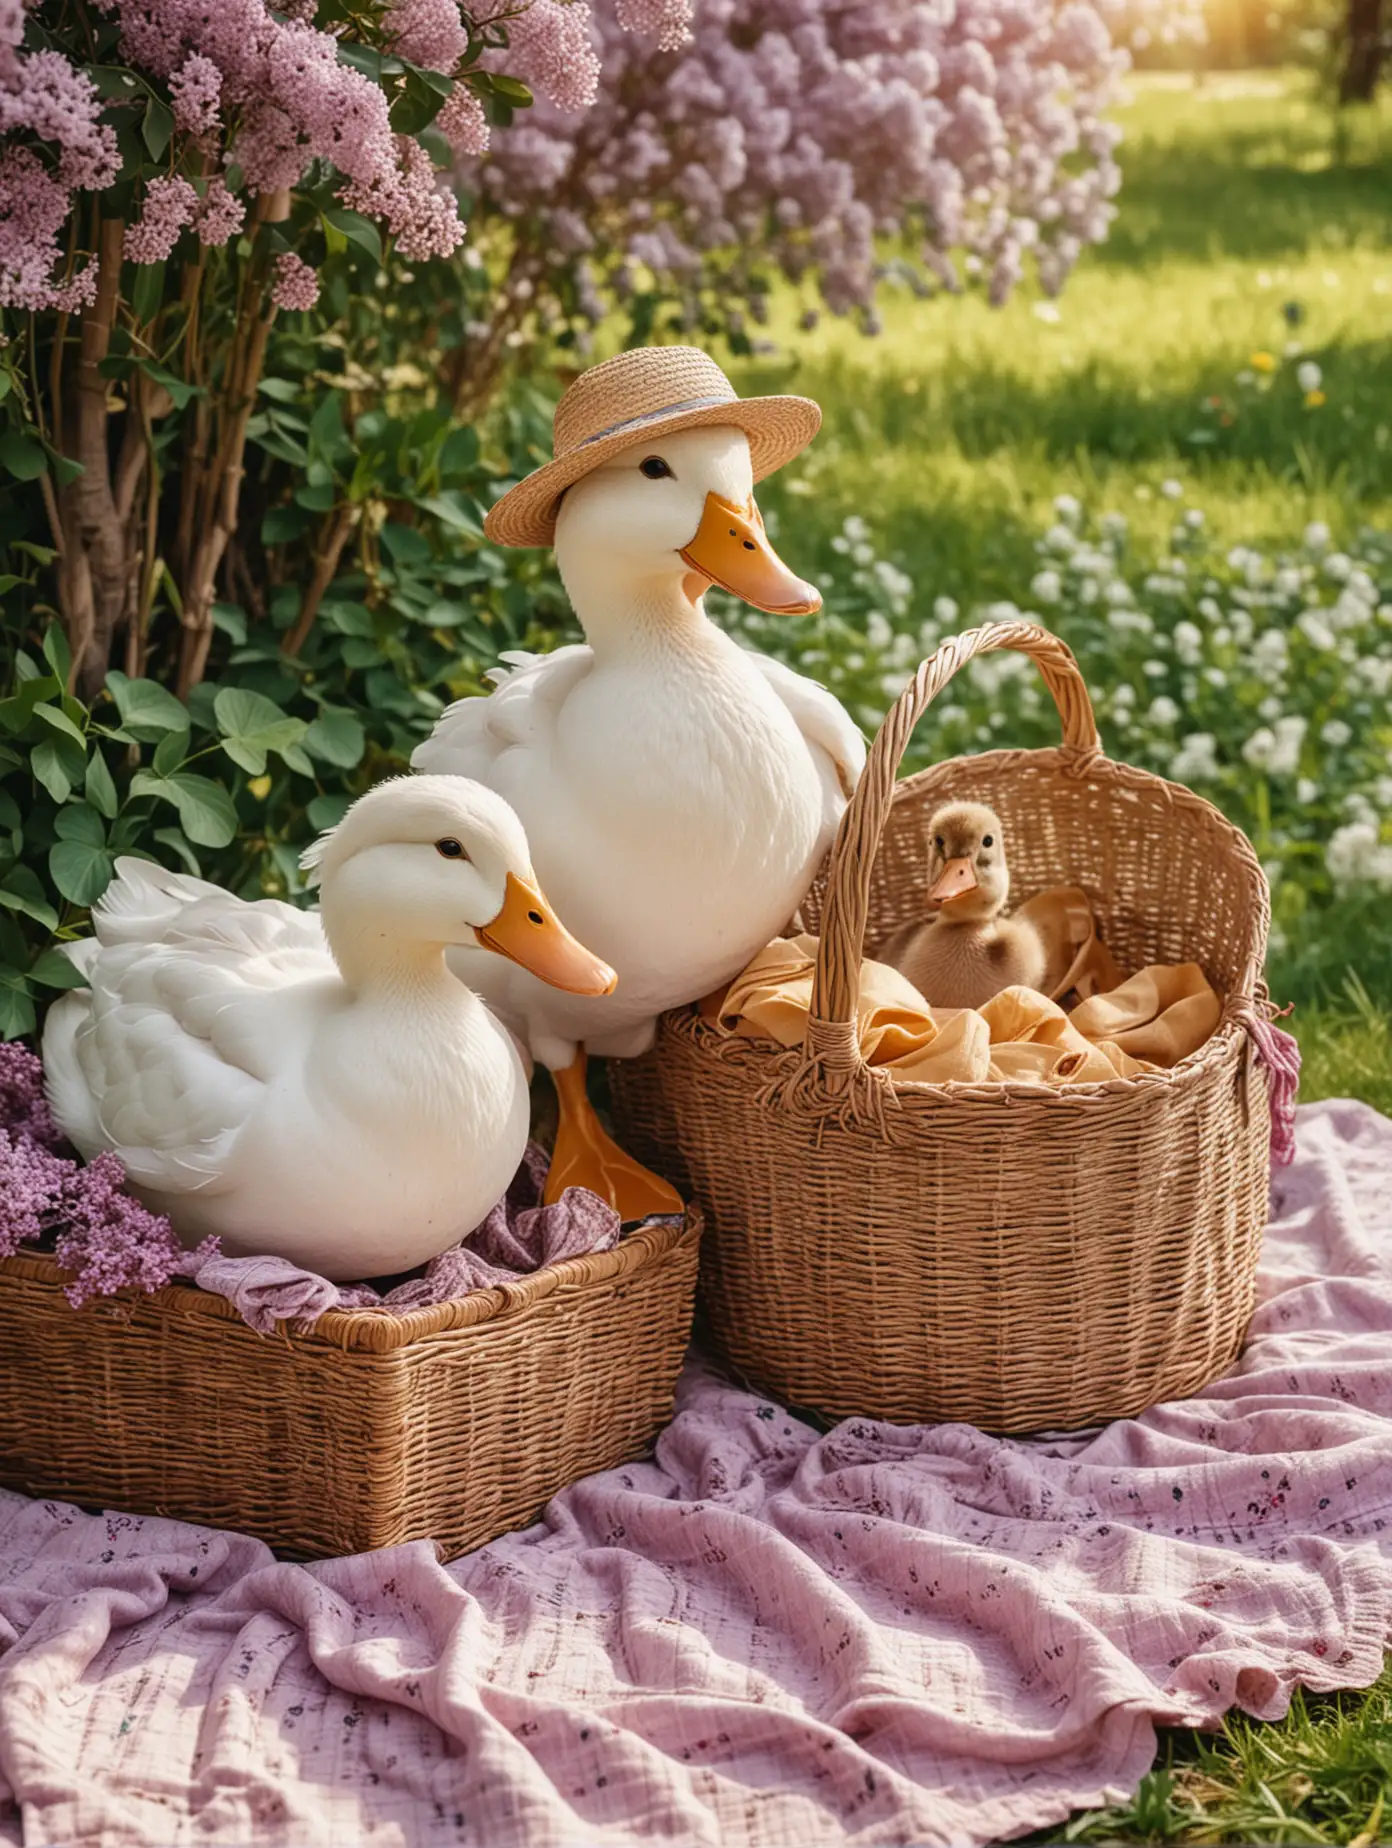 Quaint-Picnic-Scene-Ducks-in-Sarafans-Enjoying-a-Sunny-Day-in-the-Park